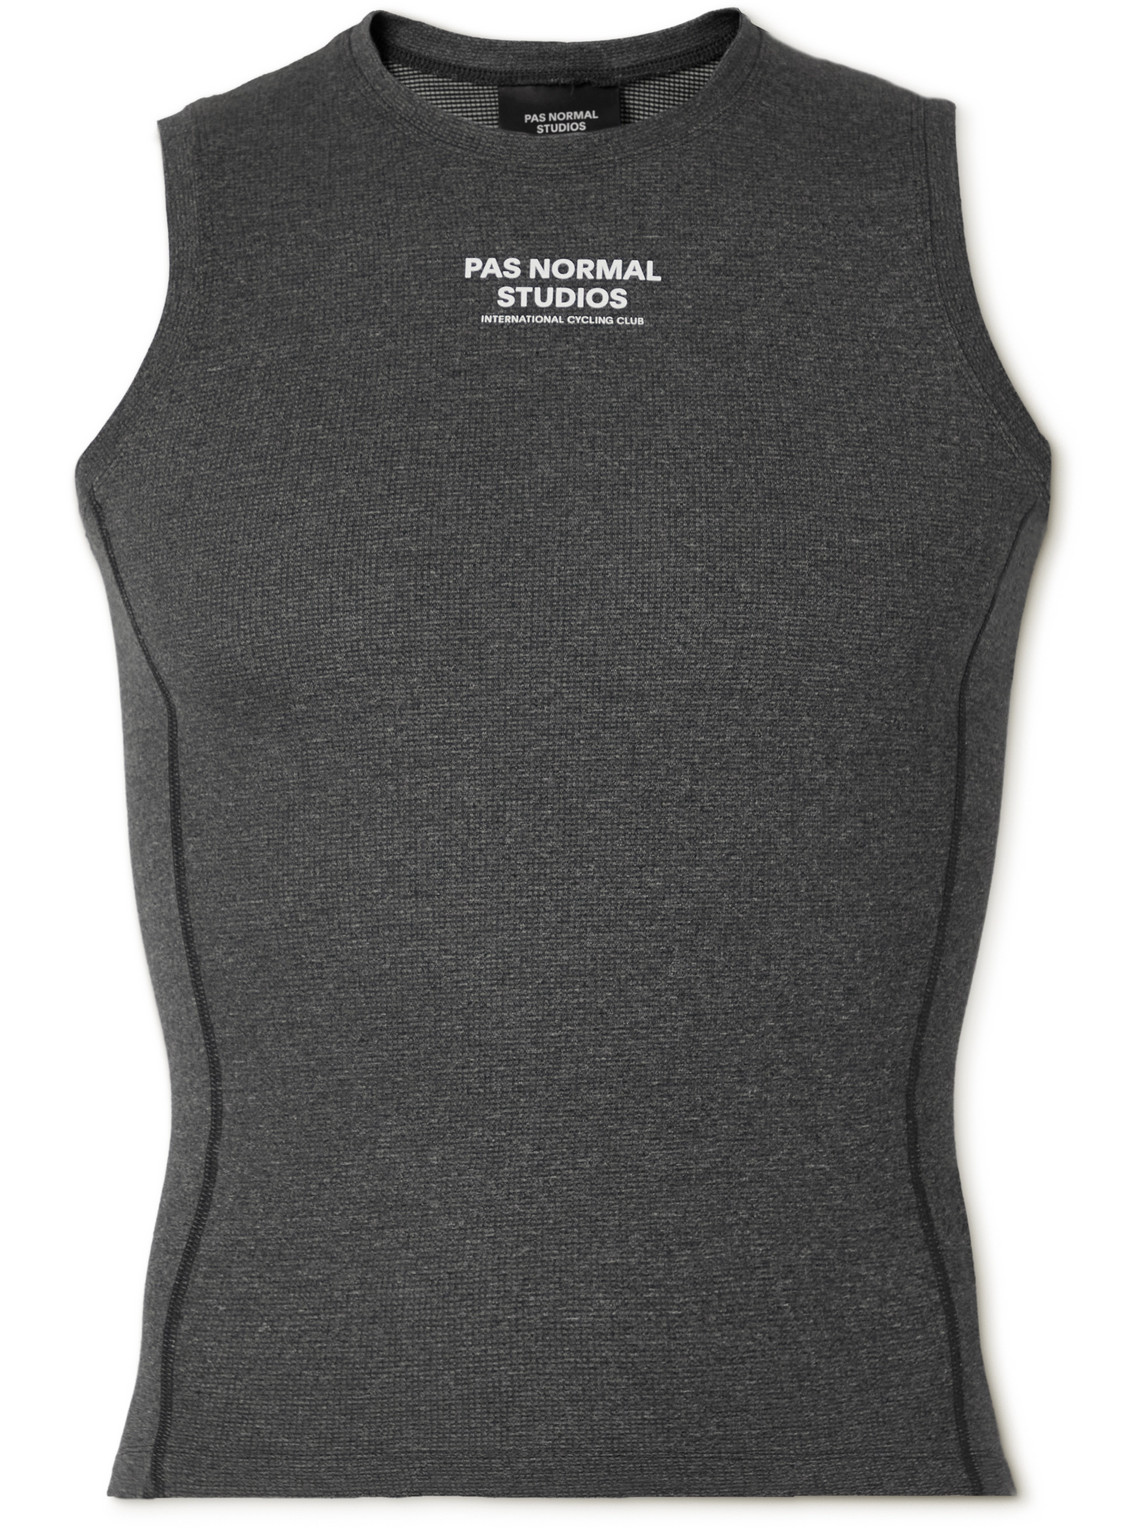 Pas Normal Studios Mid Weight Base Vest In Grey